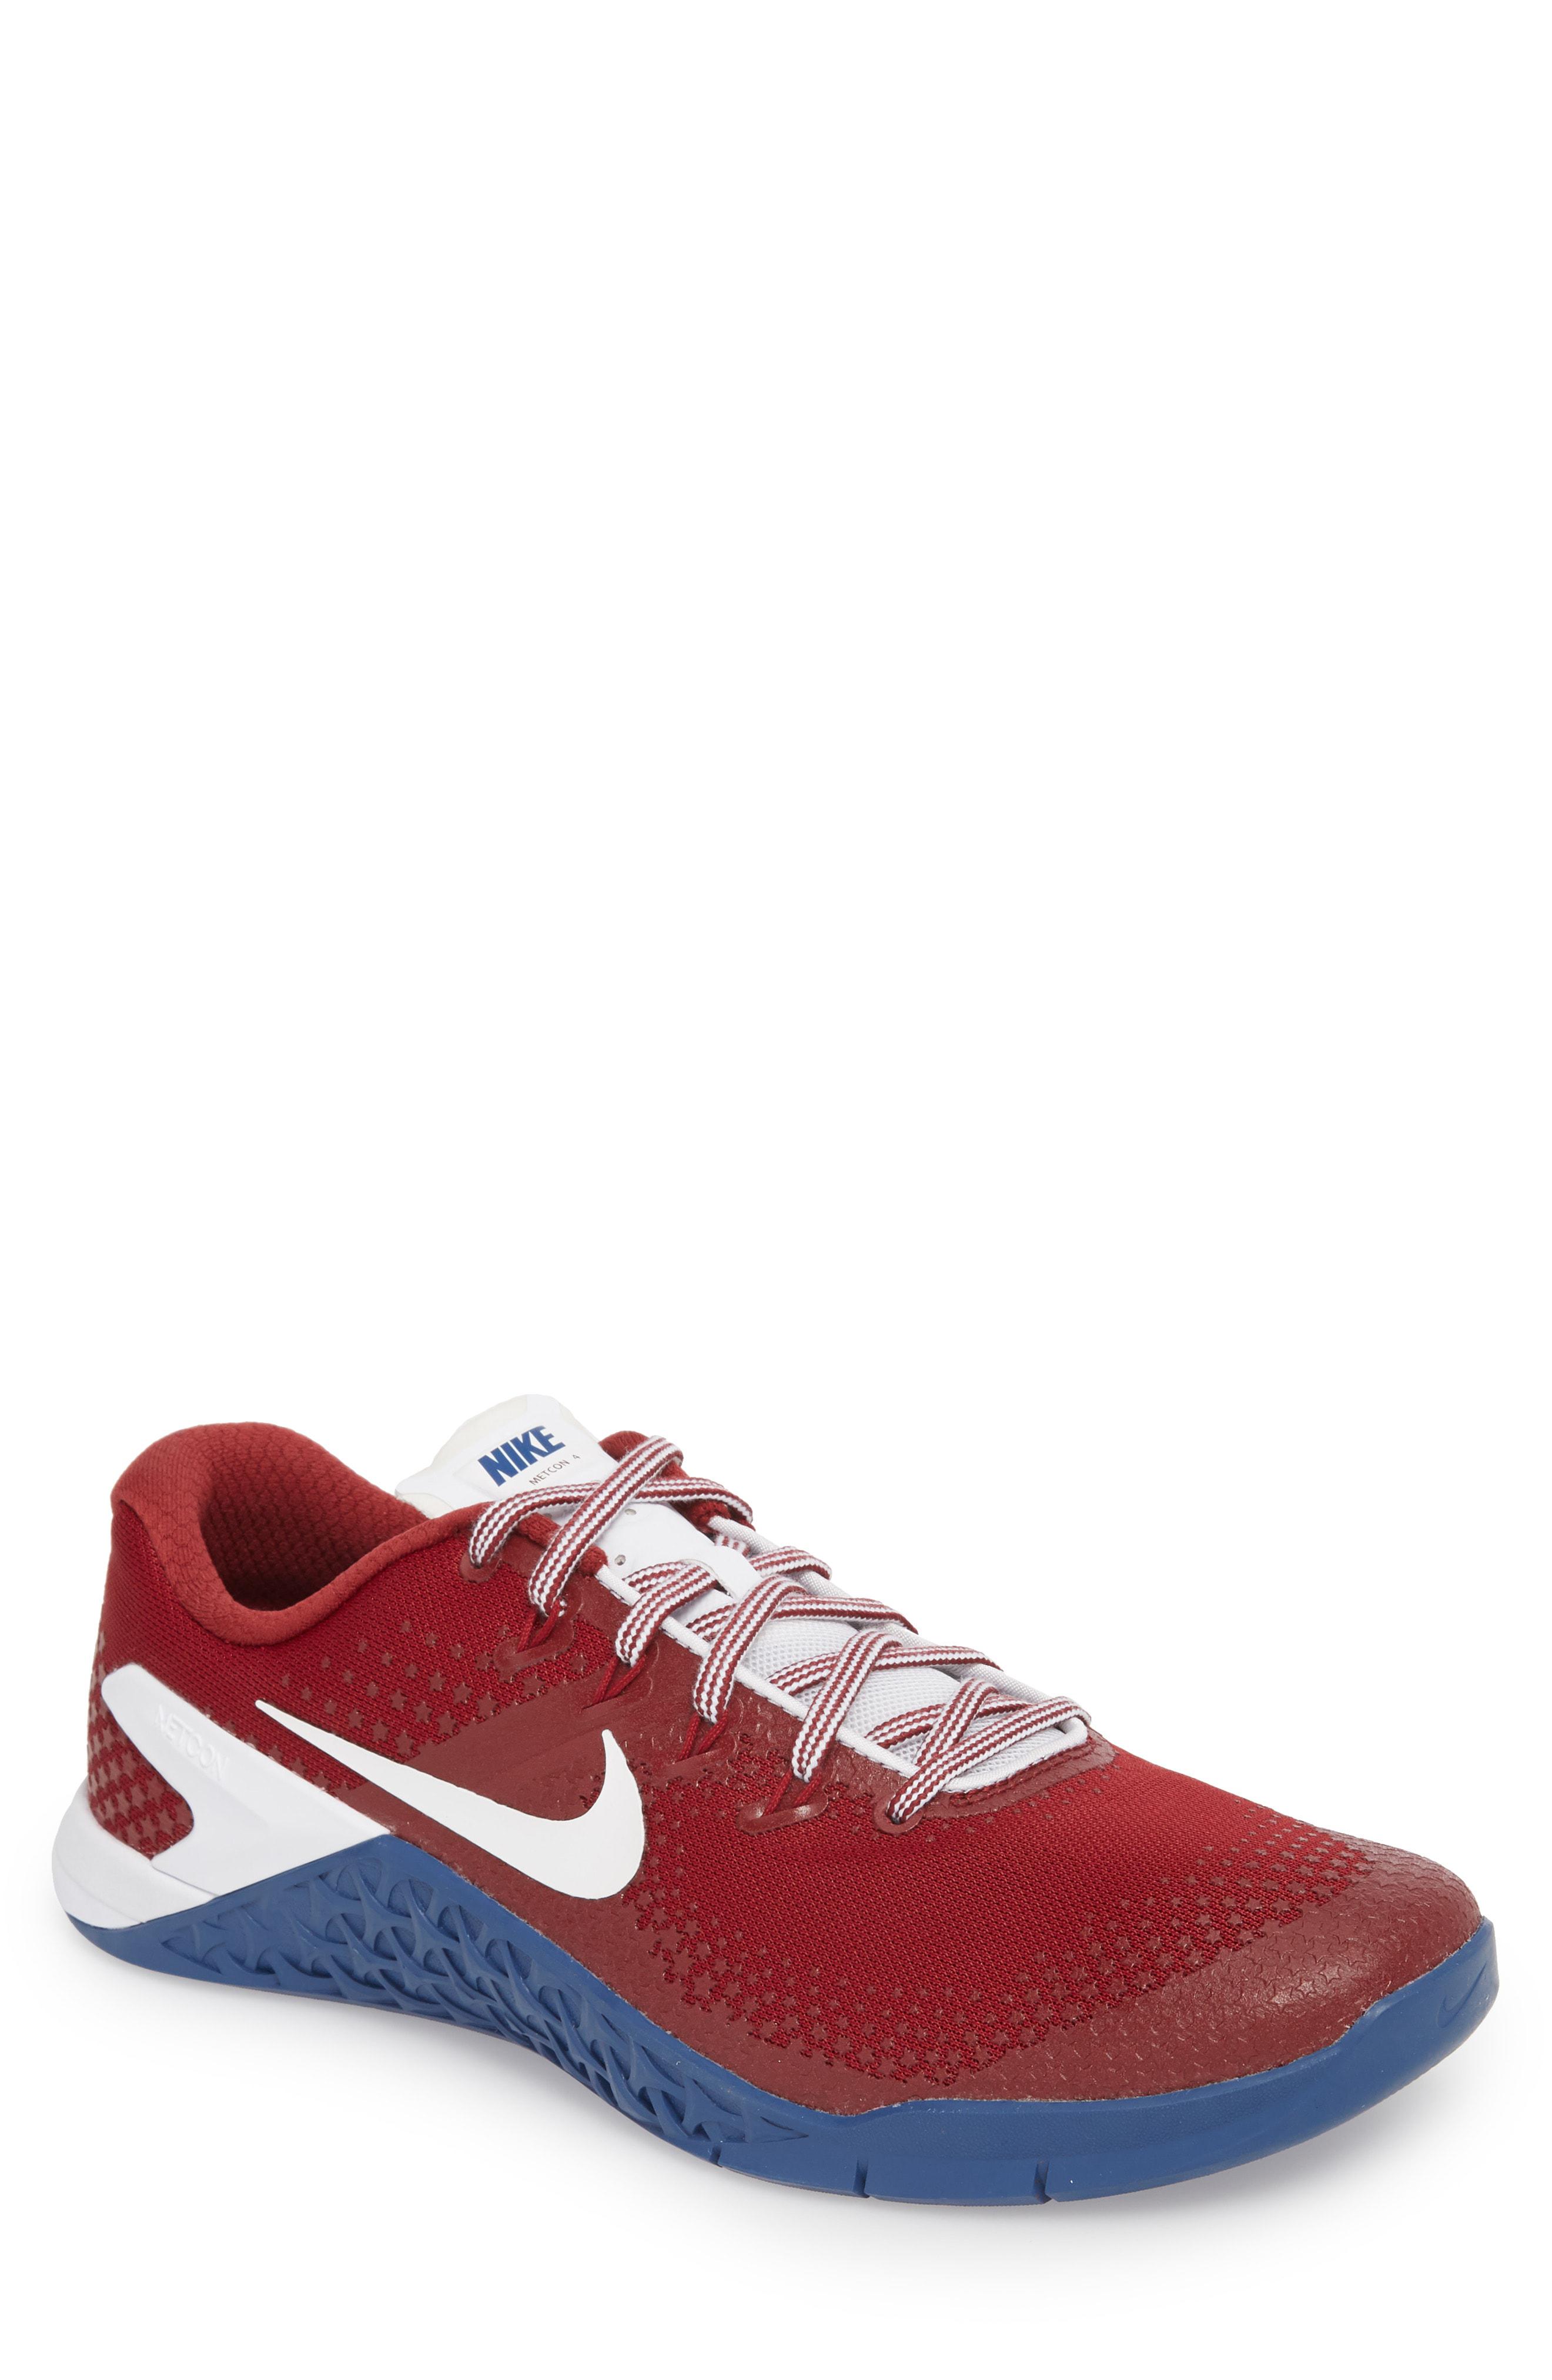 Nike Metcon 4 Americana Training Shoe 